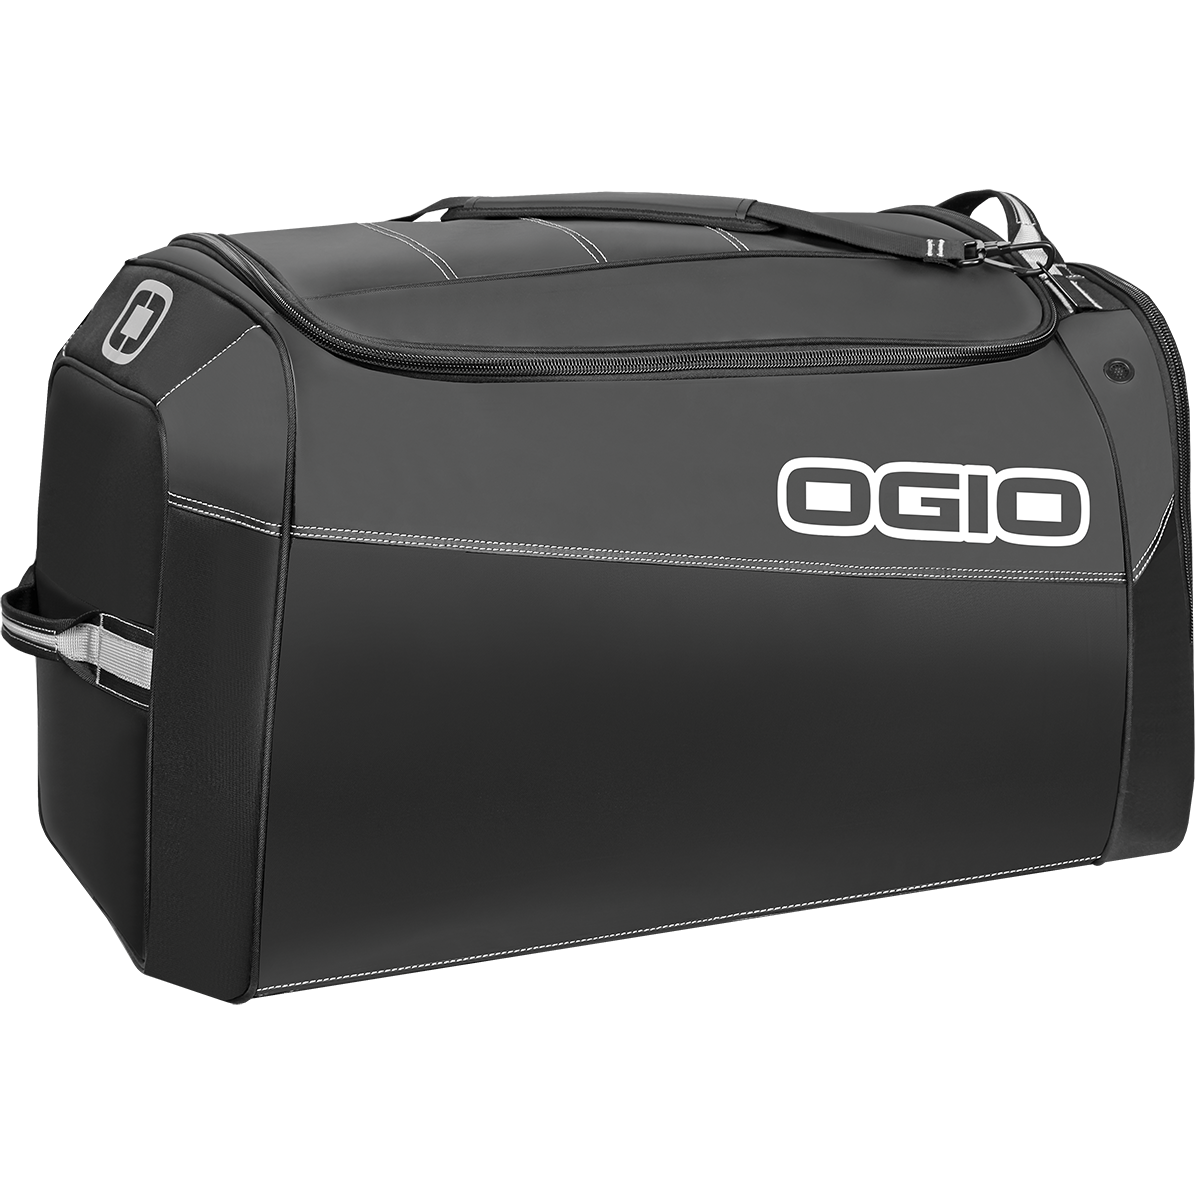 Ogio Prospect Gear Bag